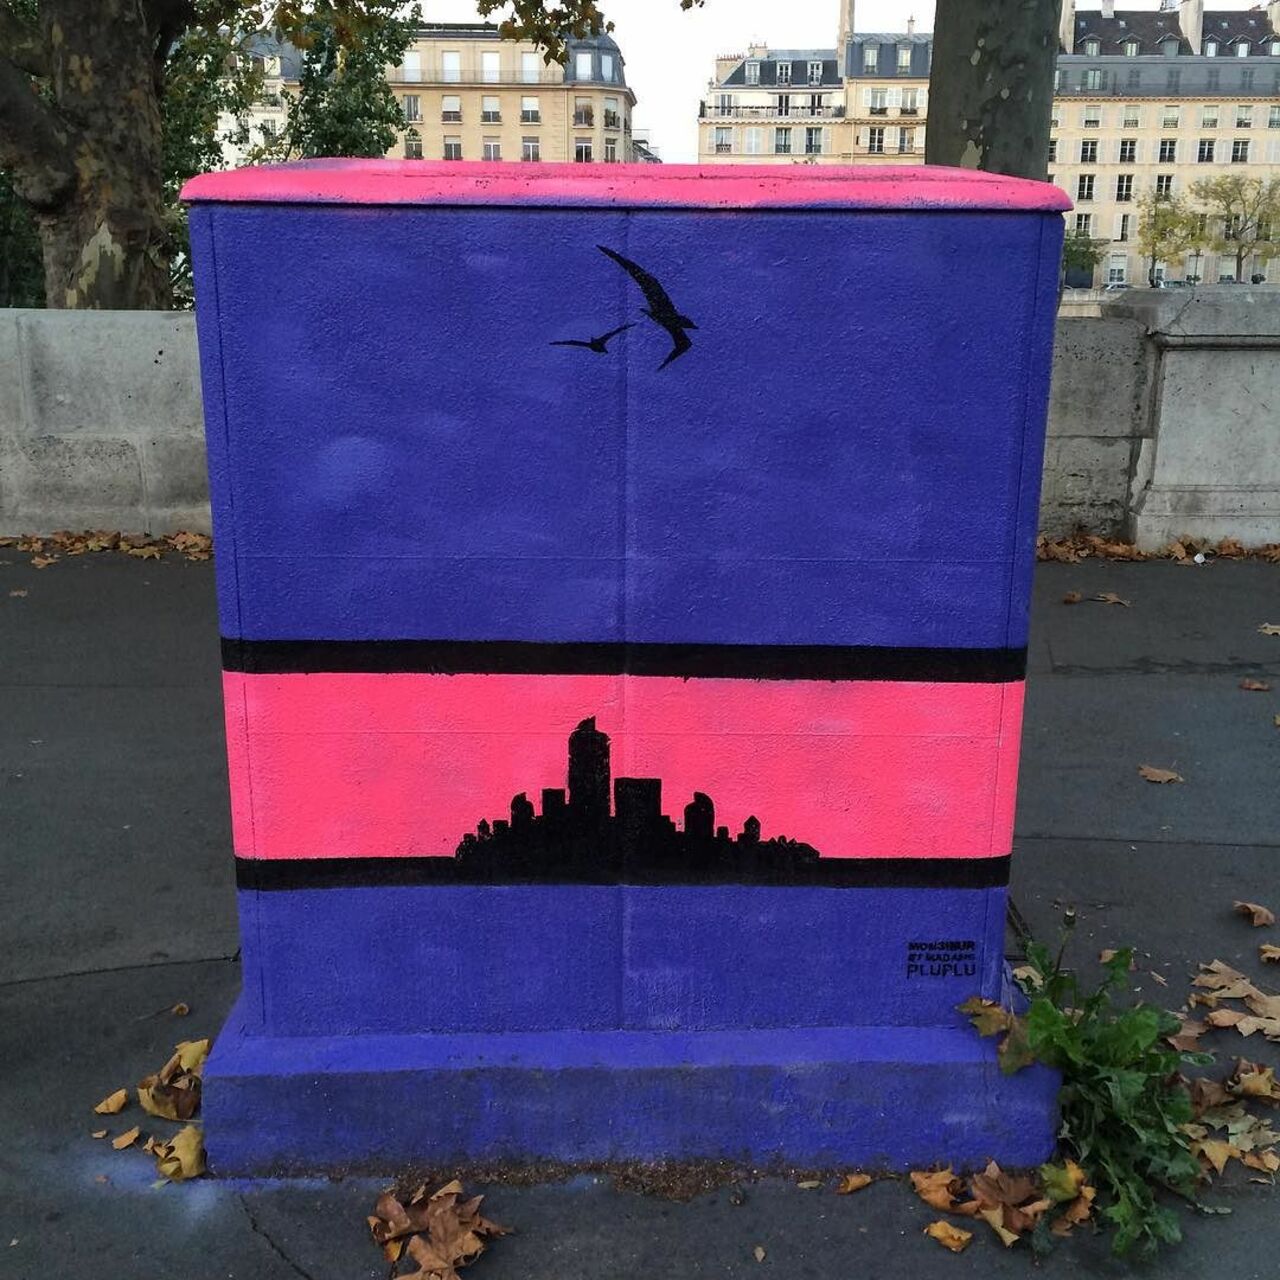 #Paris #graffiti photo by @benapix http://ift.tt/1RvElZw #StreetArt https://t.co/ivUnFvaylV